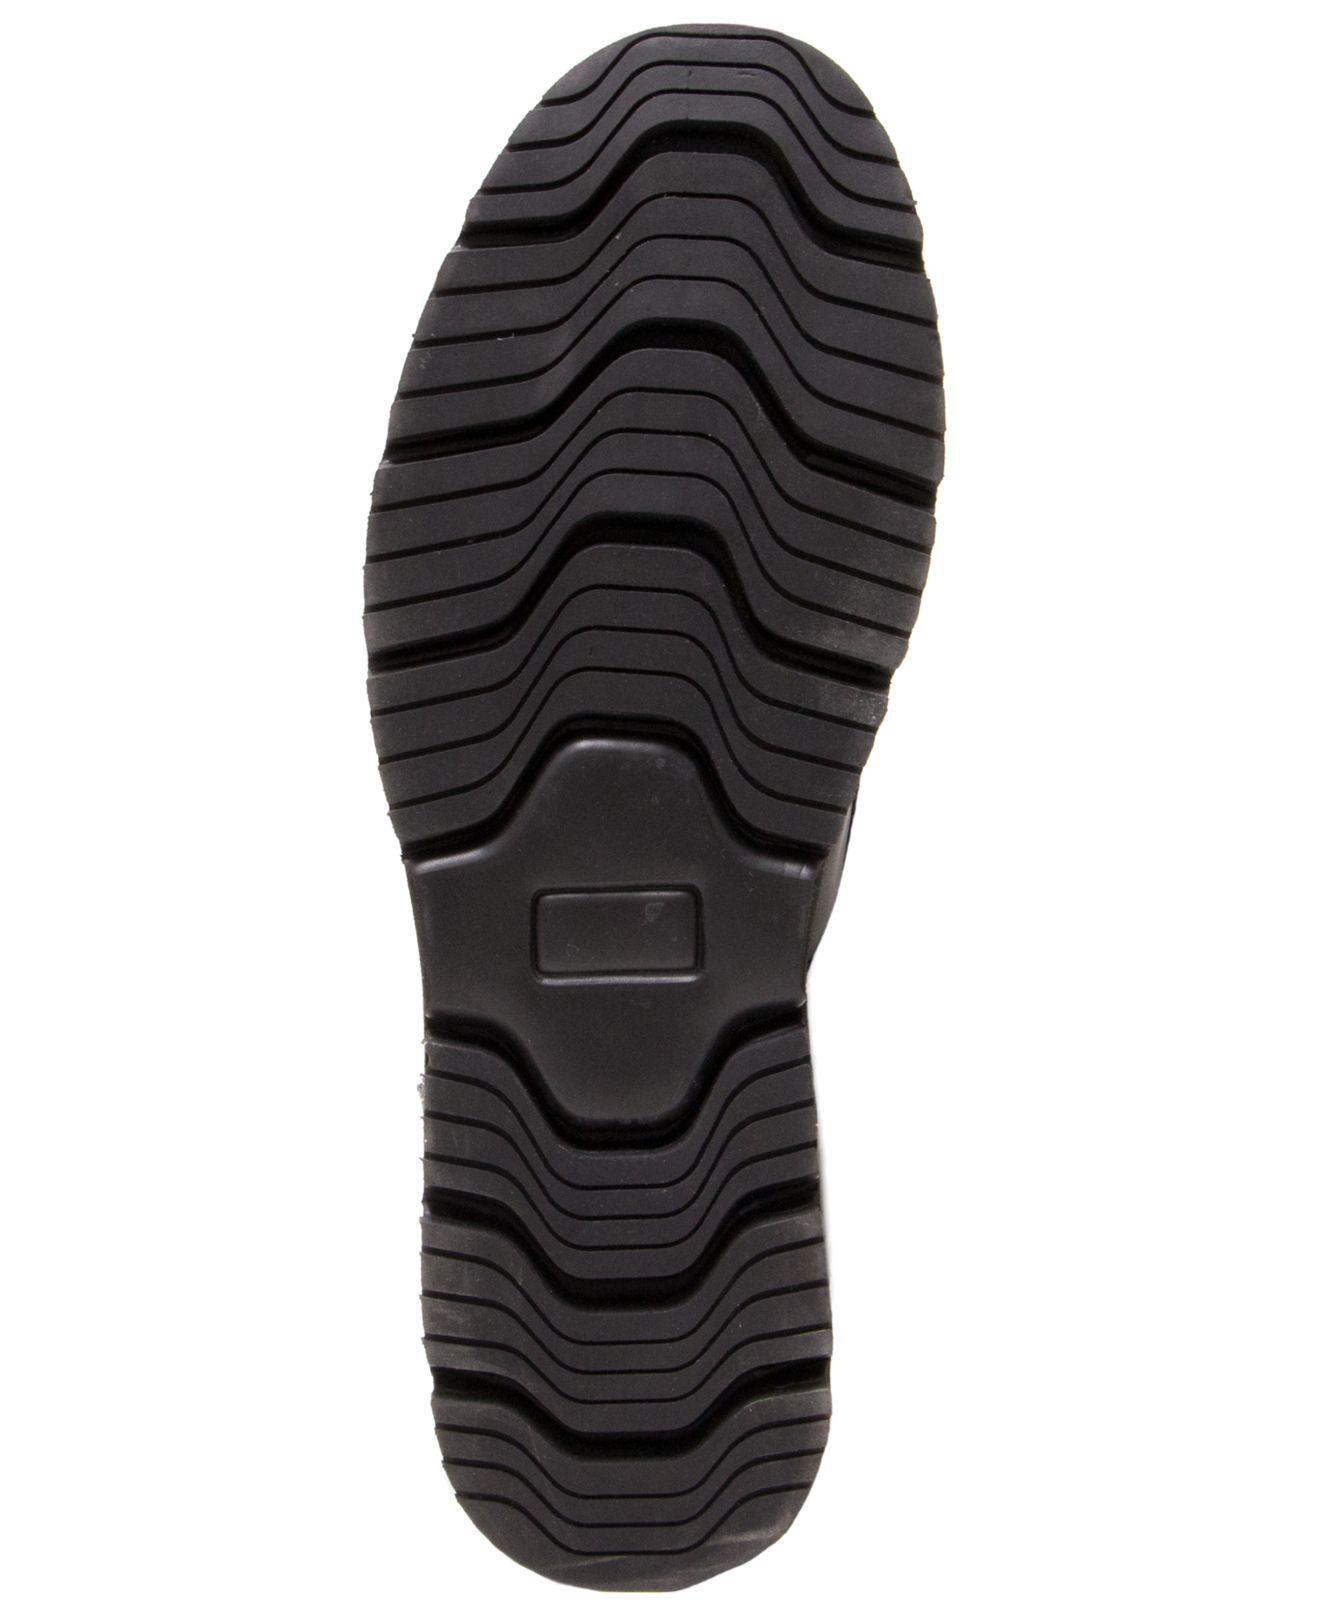 Levi's Leather Dean 2.0 Moc-toe Boots in Monochrome (Black) for Men - Lyst